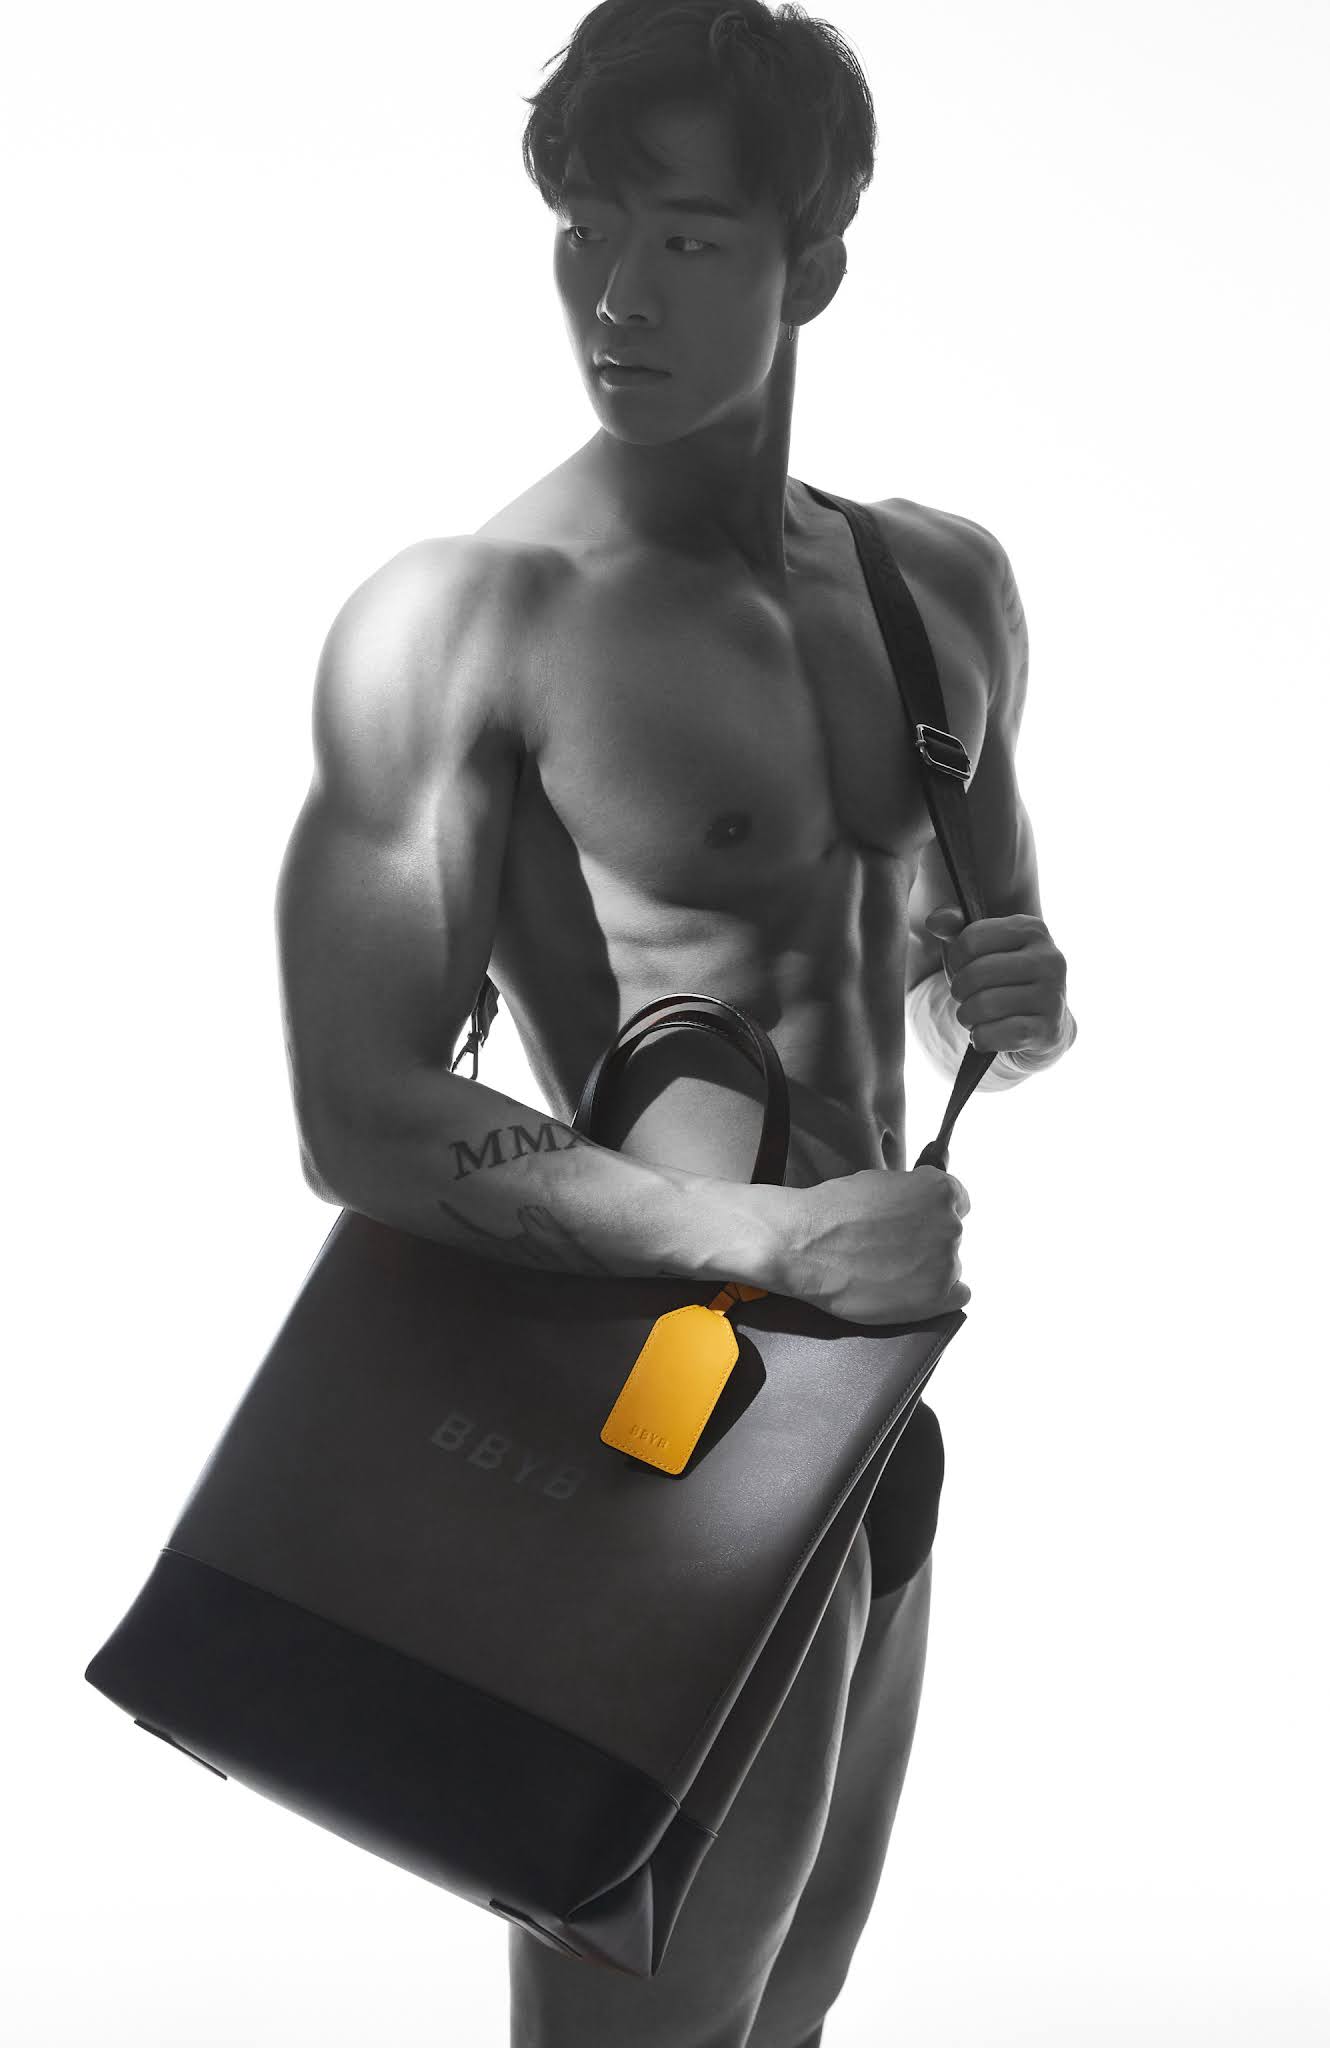 реклама сумок голыми мужиками фото 18